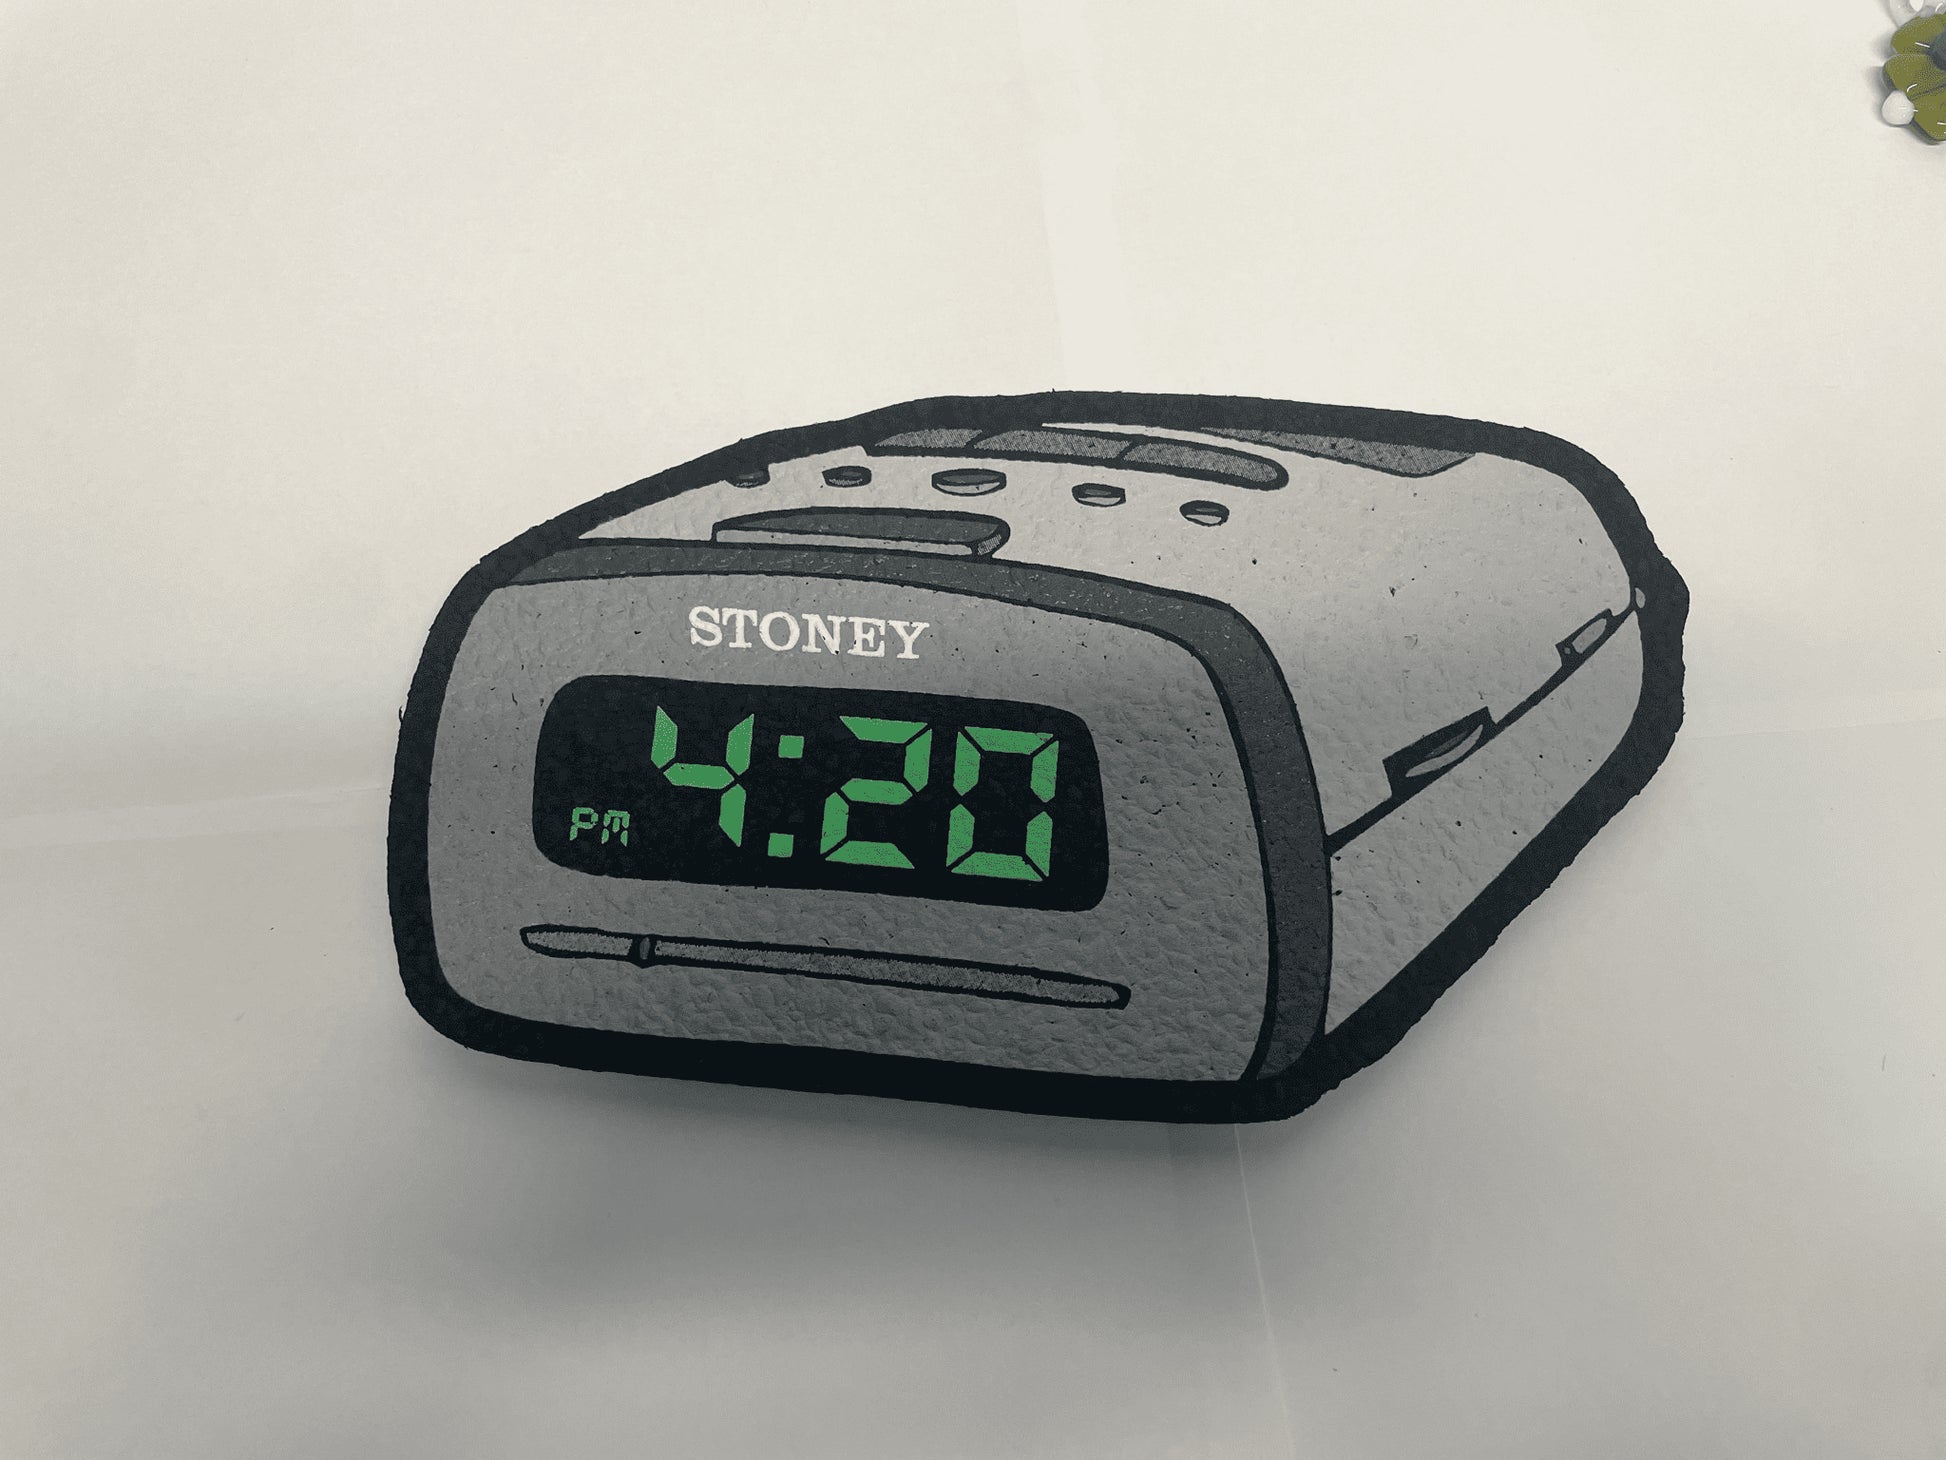 exquisite art piece - Stoney 4:20 Alarm Clock Moodmat